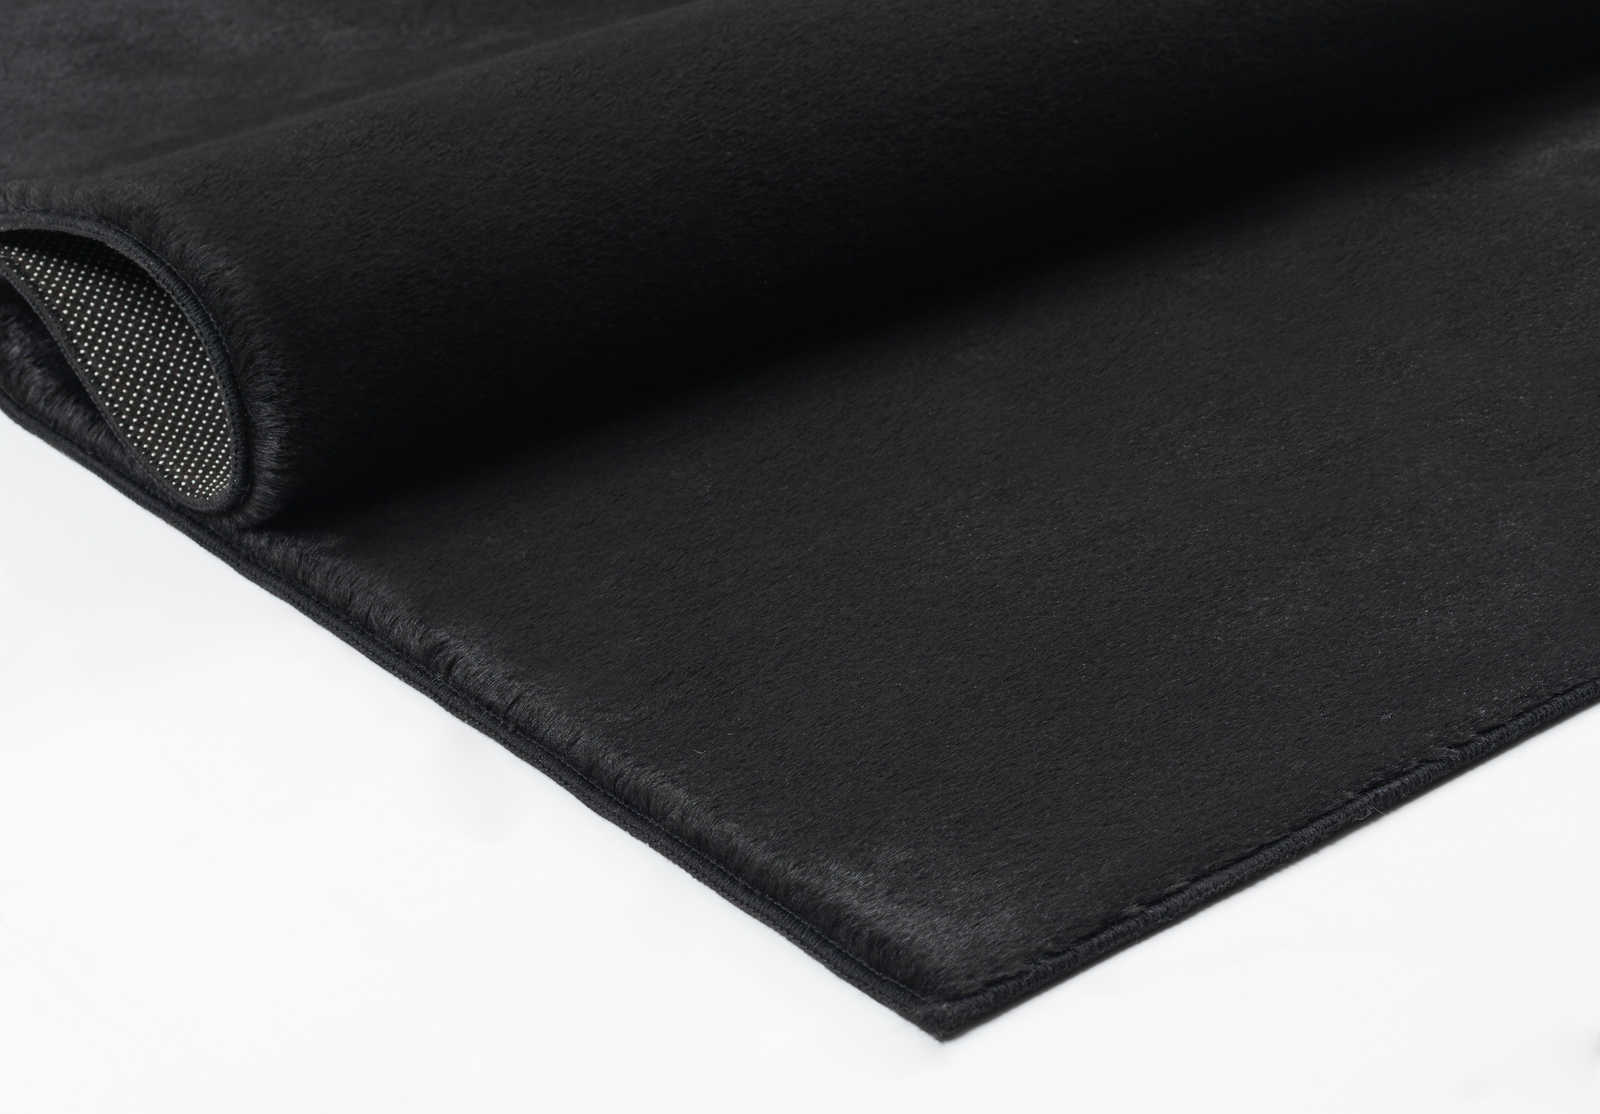             Knuffelzacht hoogpolig tapijt in zwart - 100 x 50 cm
        